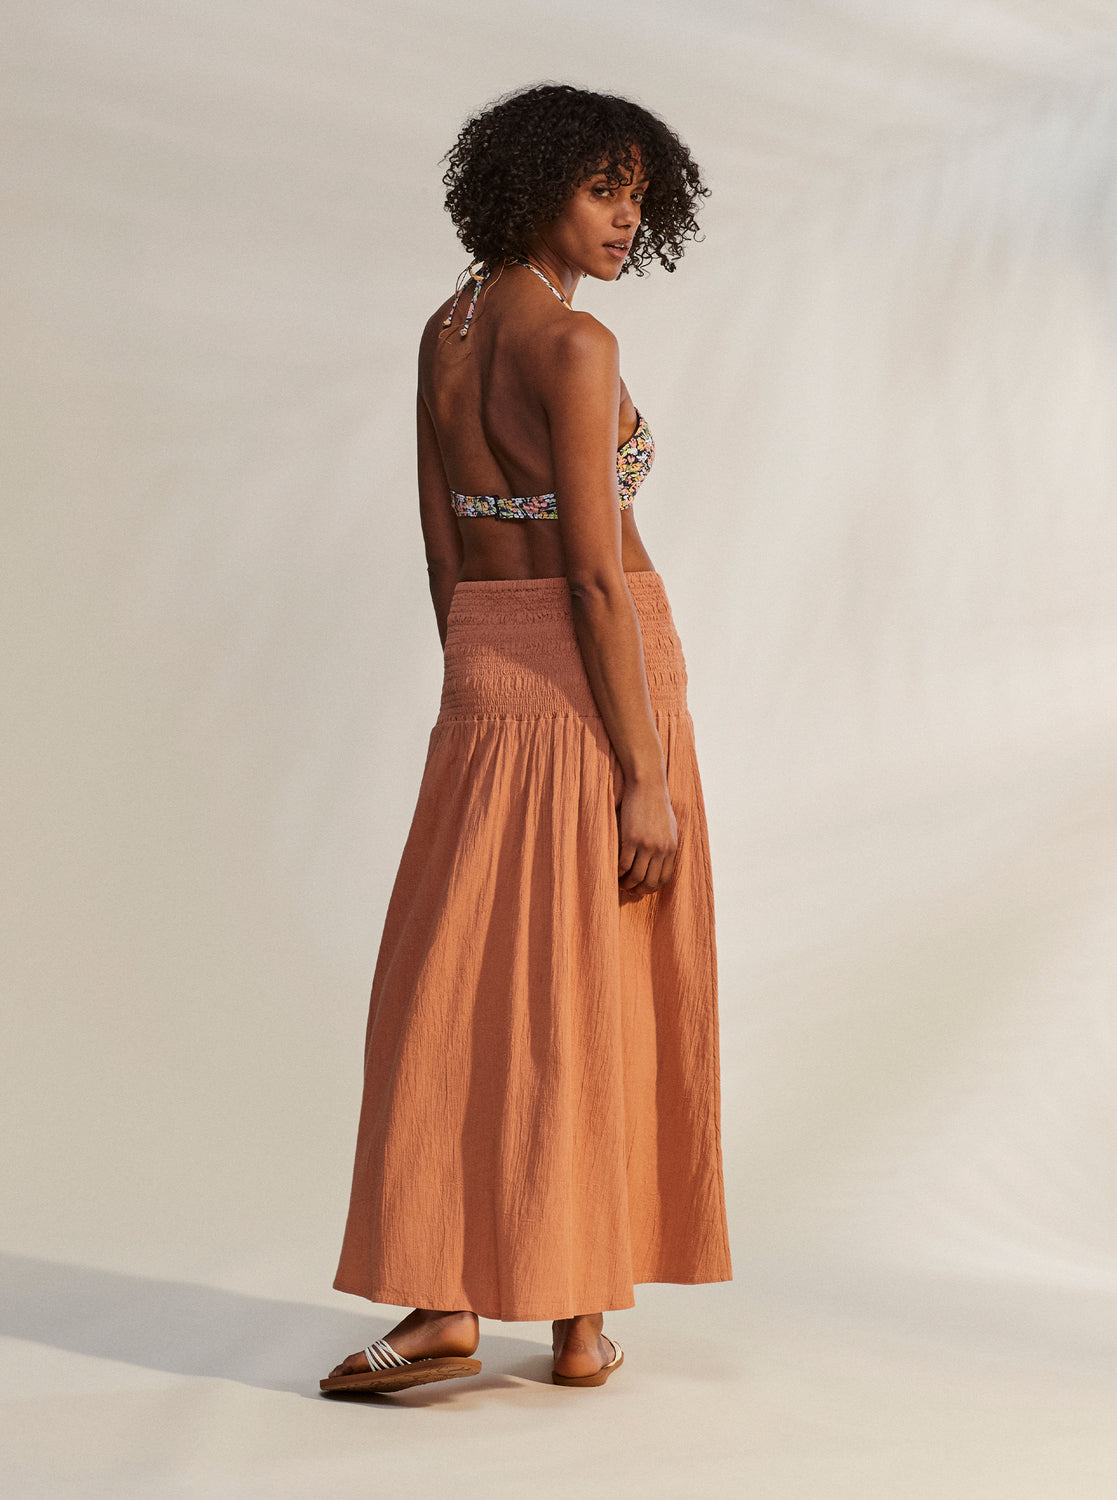 Cute Summer Ankle Length Versatile Skirt - Cork – Roxy.com